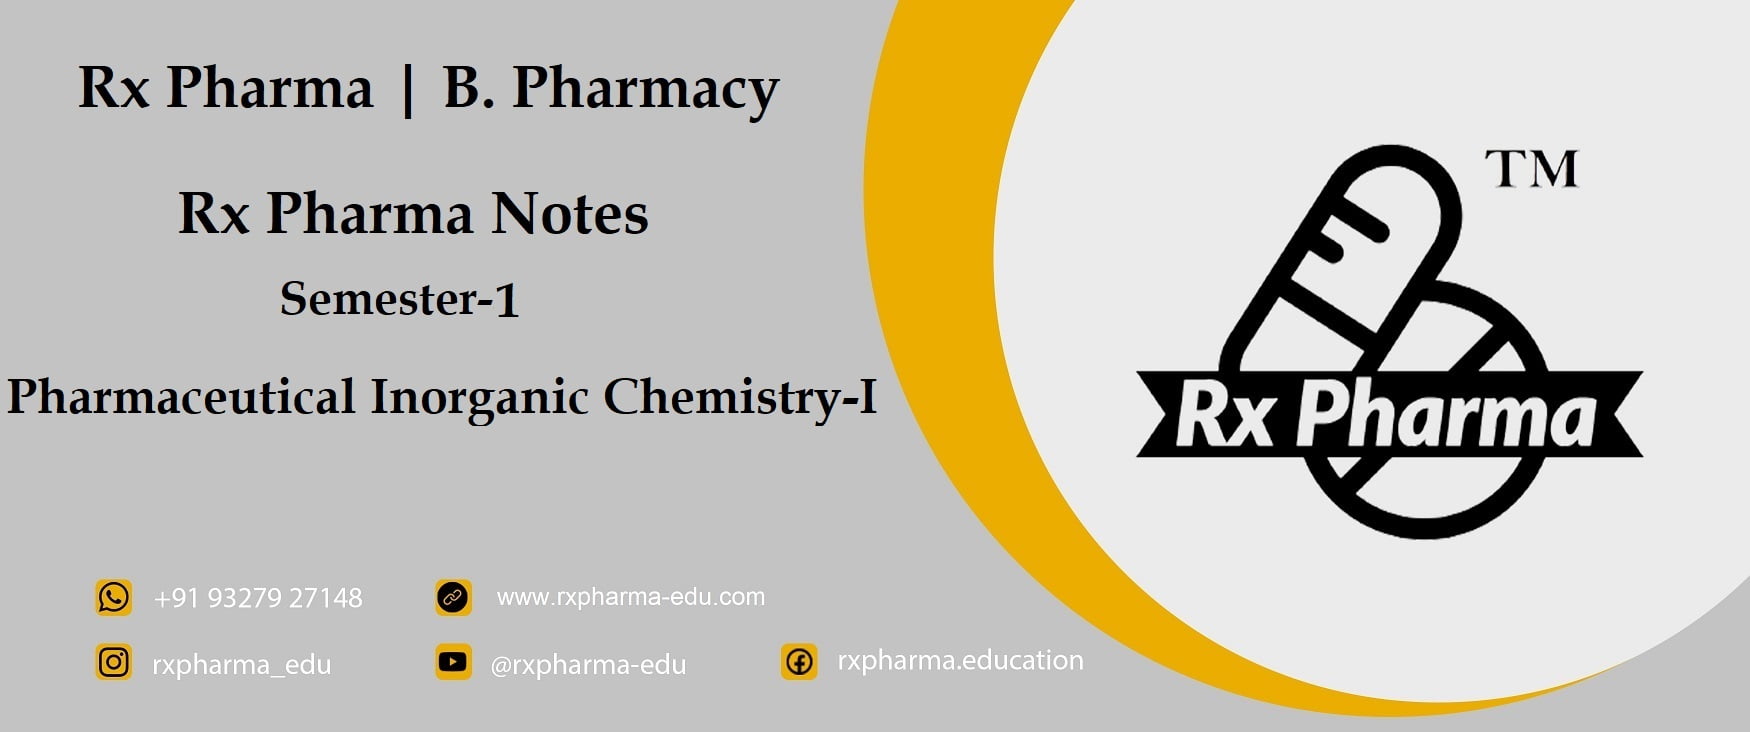 Pharmaceutical Inorganic Chemistry Notes Banner